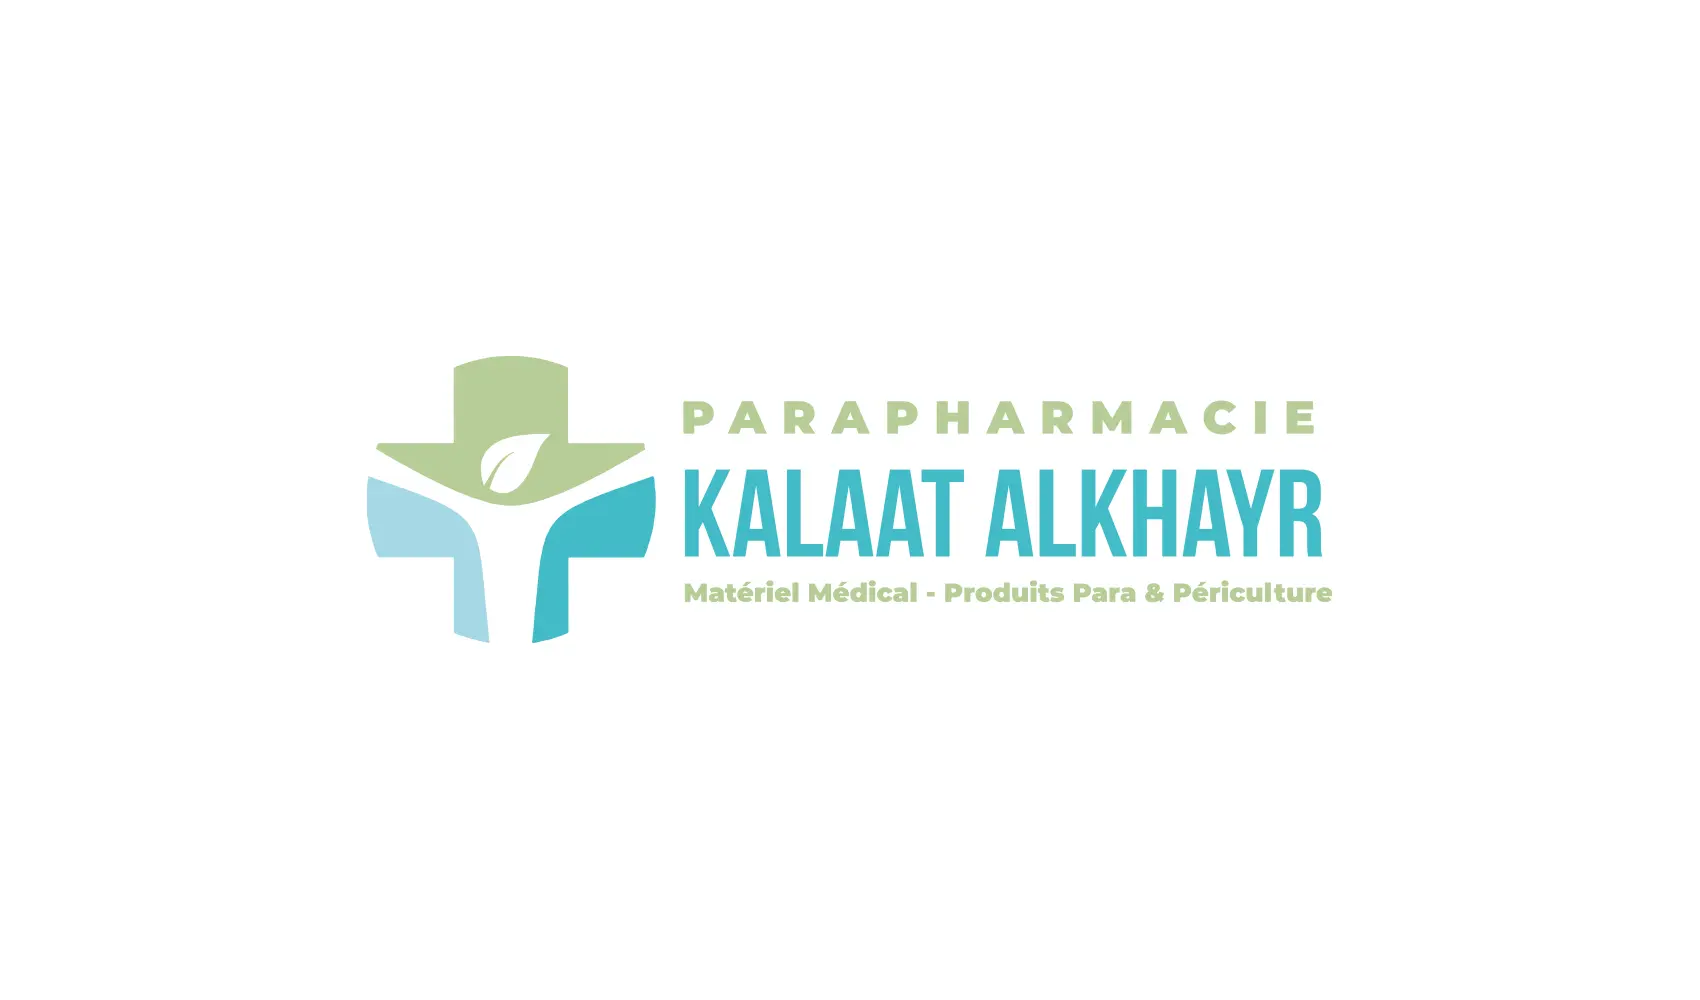 Parapharmacie Kalaat Alkhayr